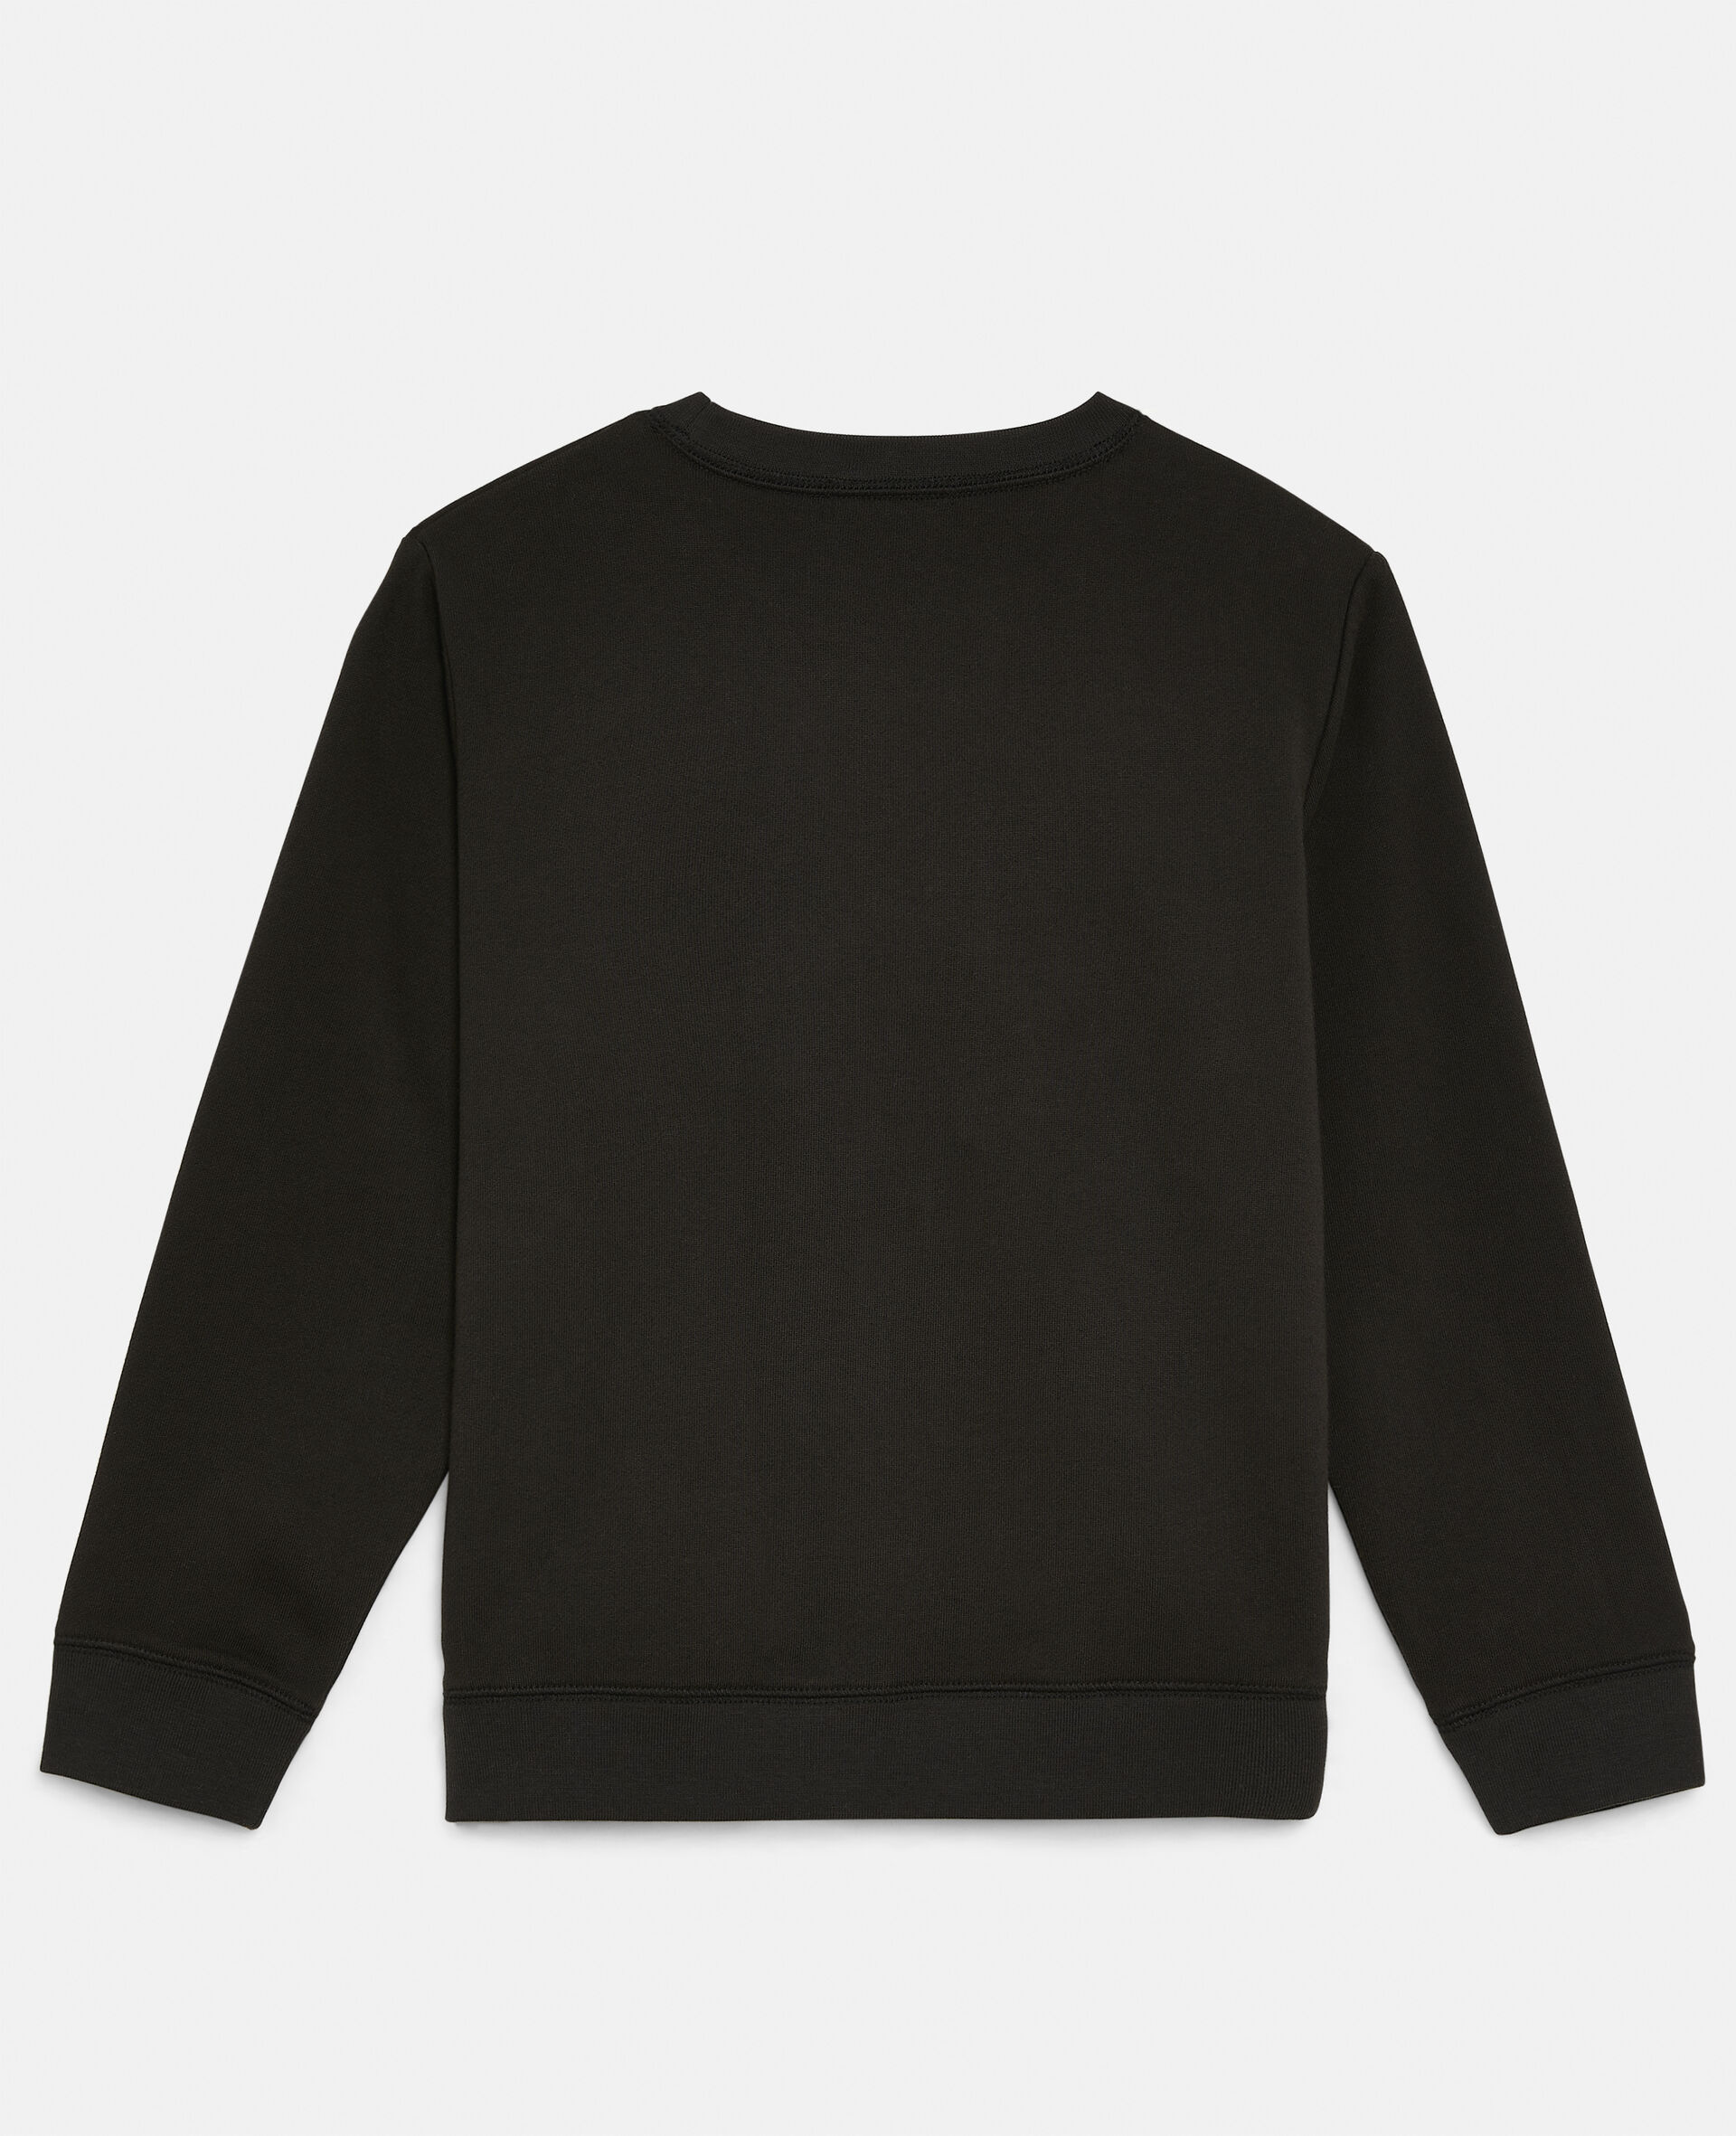 Popsicle Print Fleece Sweatshirt-Black-large image number 2